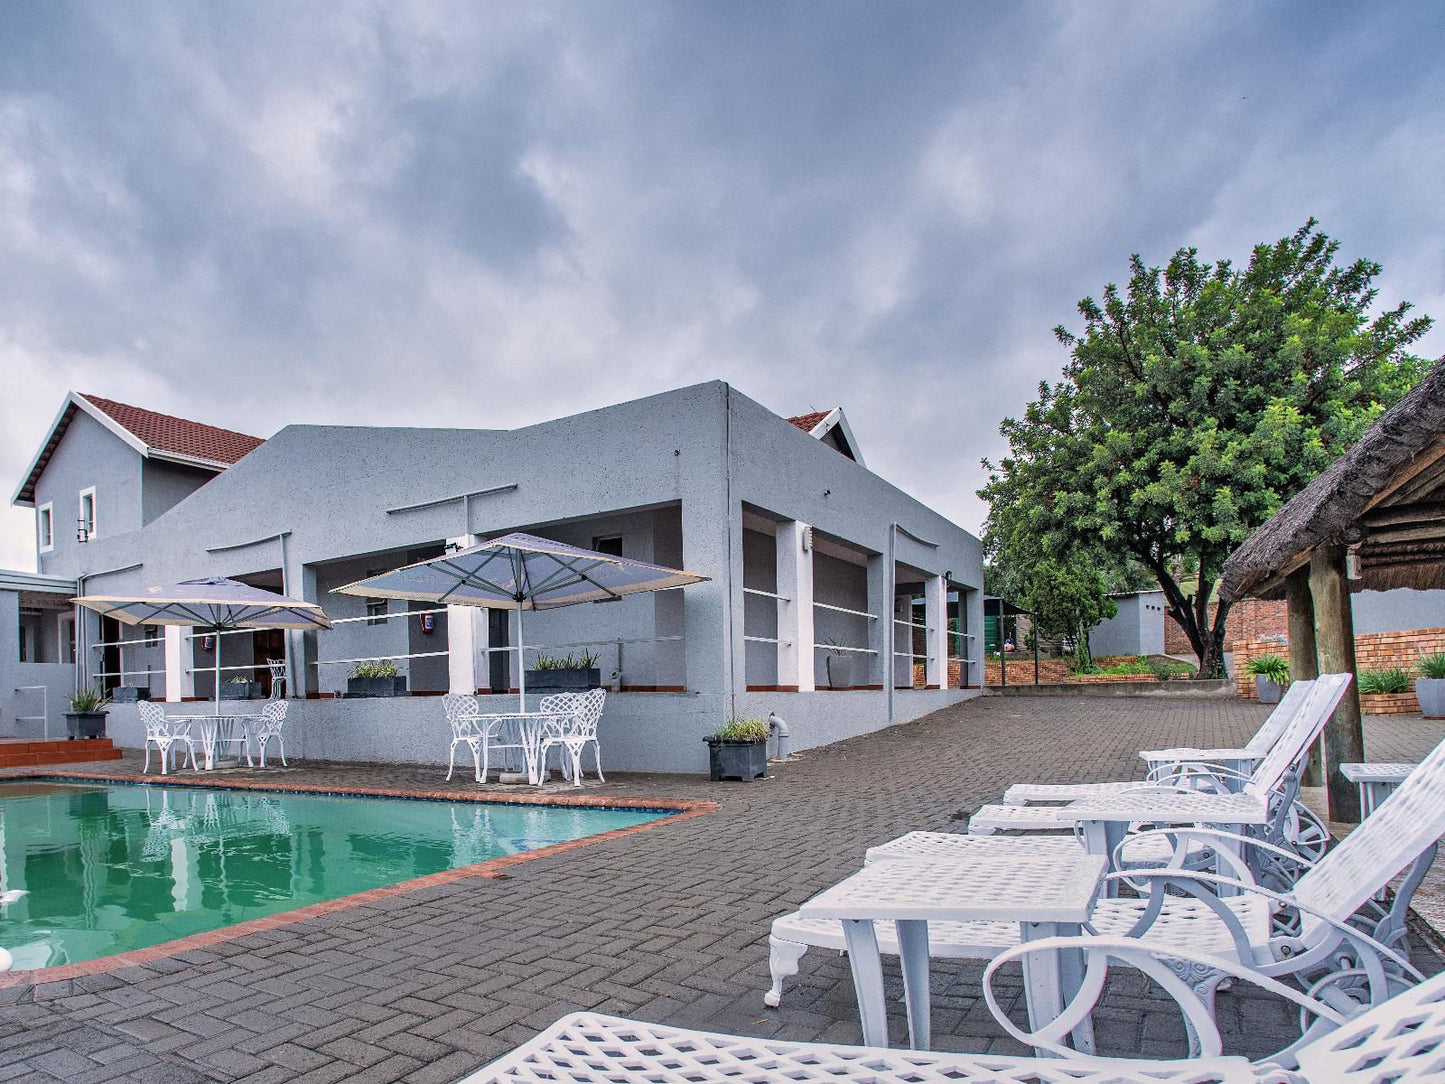 Khayalami Hotels Emalahleni Riverview Witbank Emalahleni Mpumalanga South Africa House, Building, Architecture, Swimming Pool